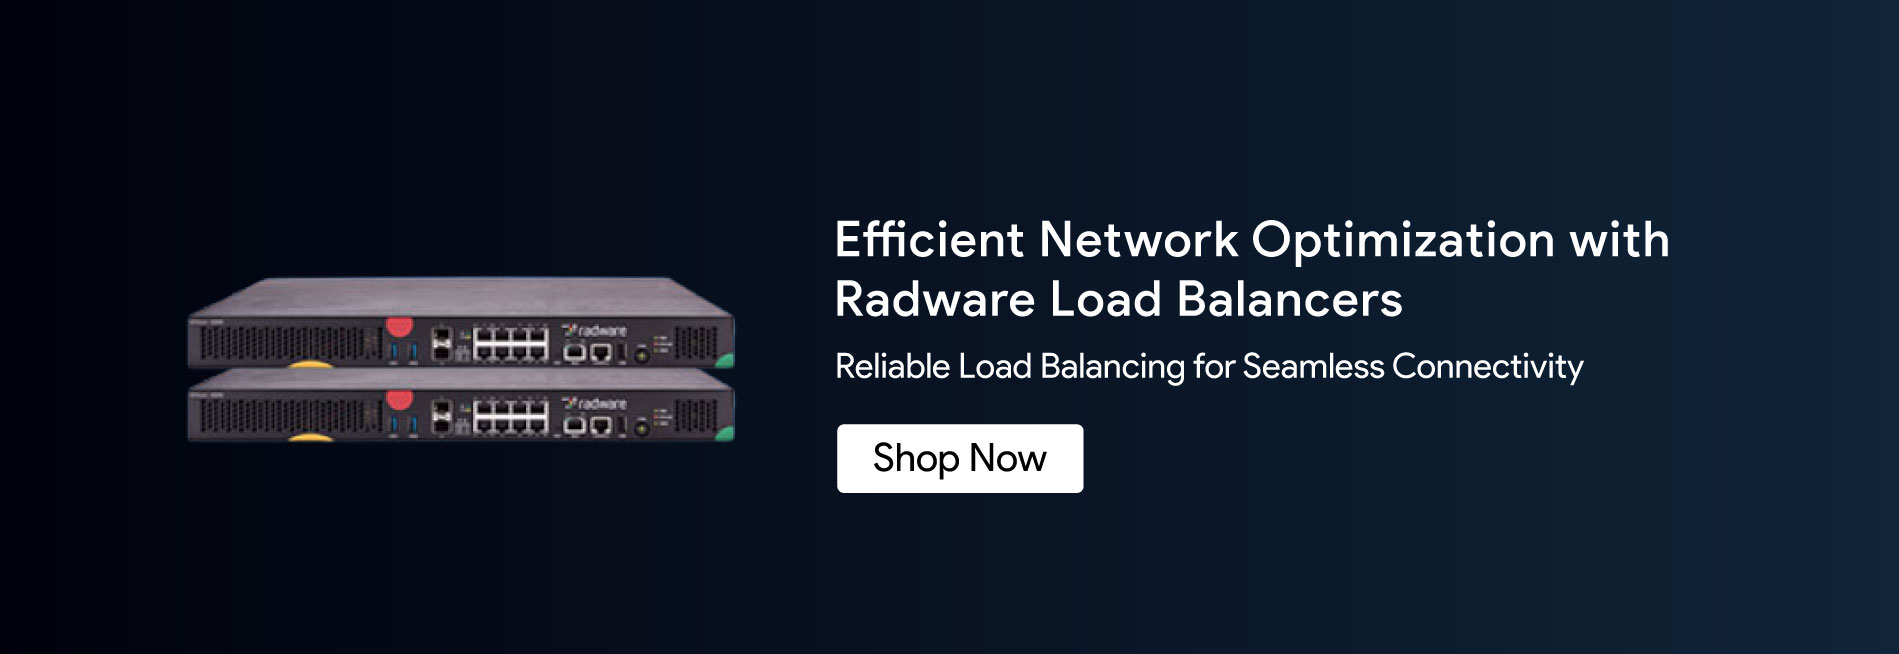 Radware-Load-Balancers